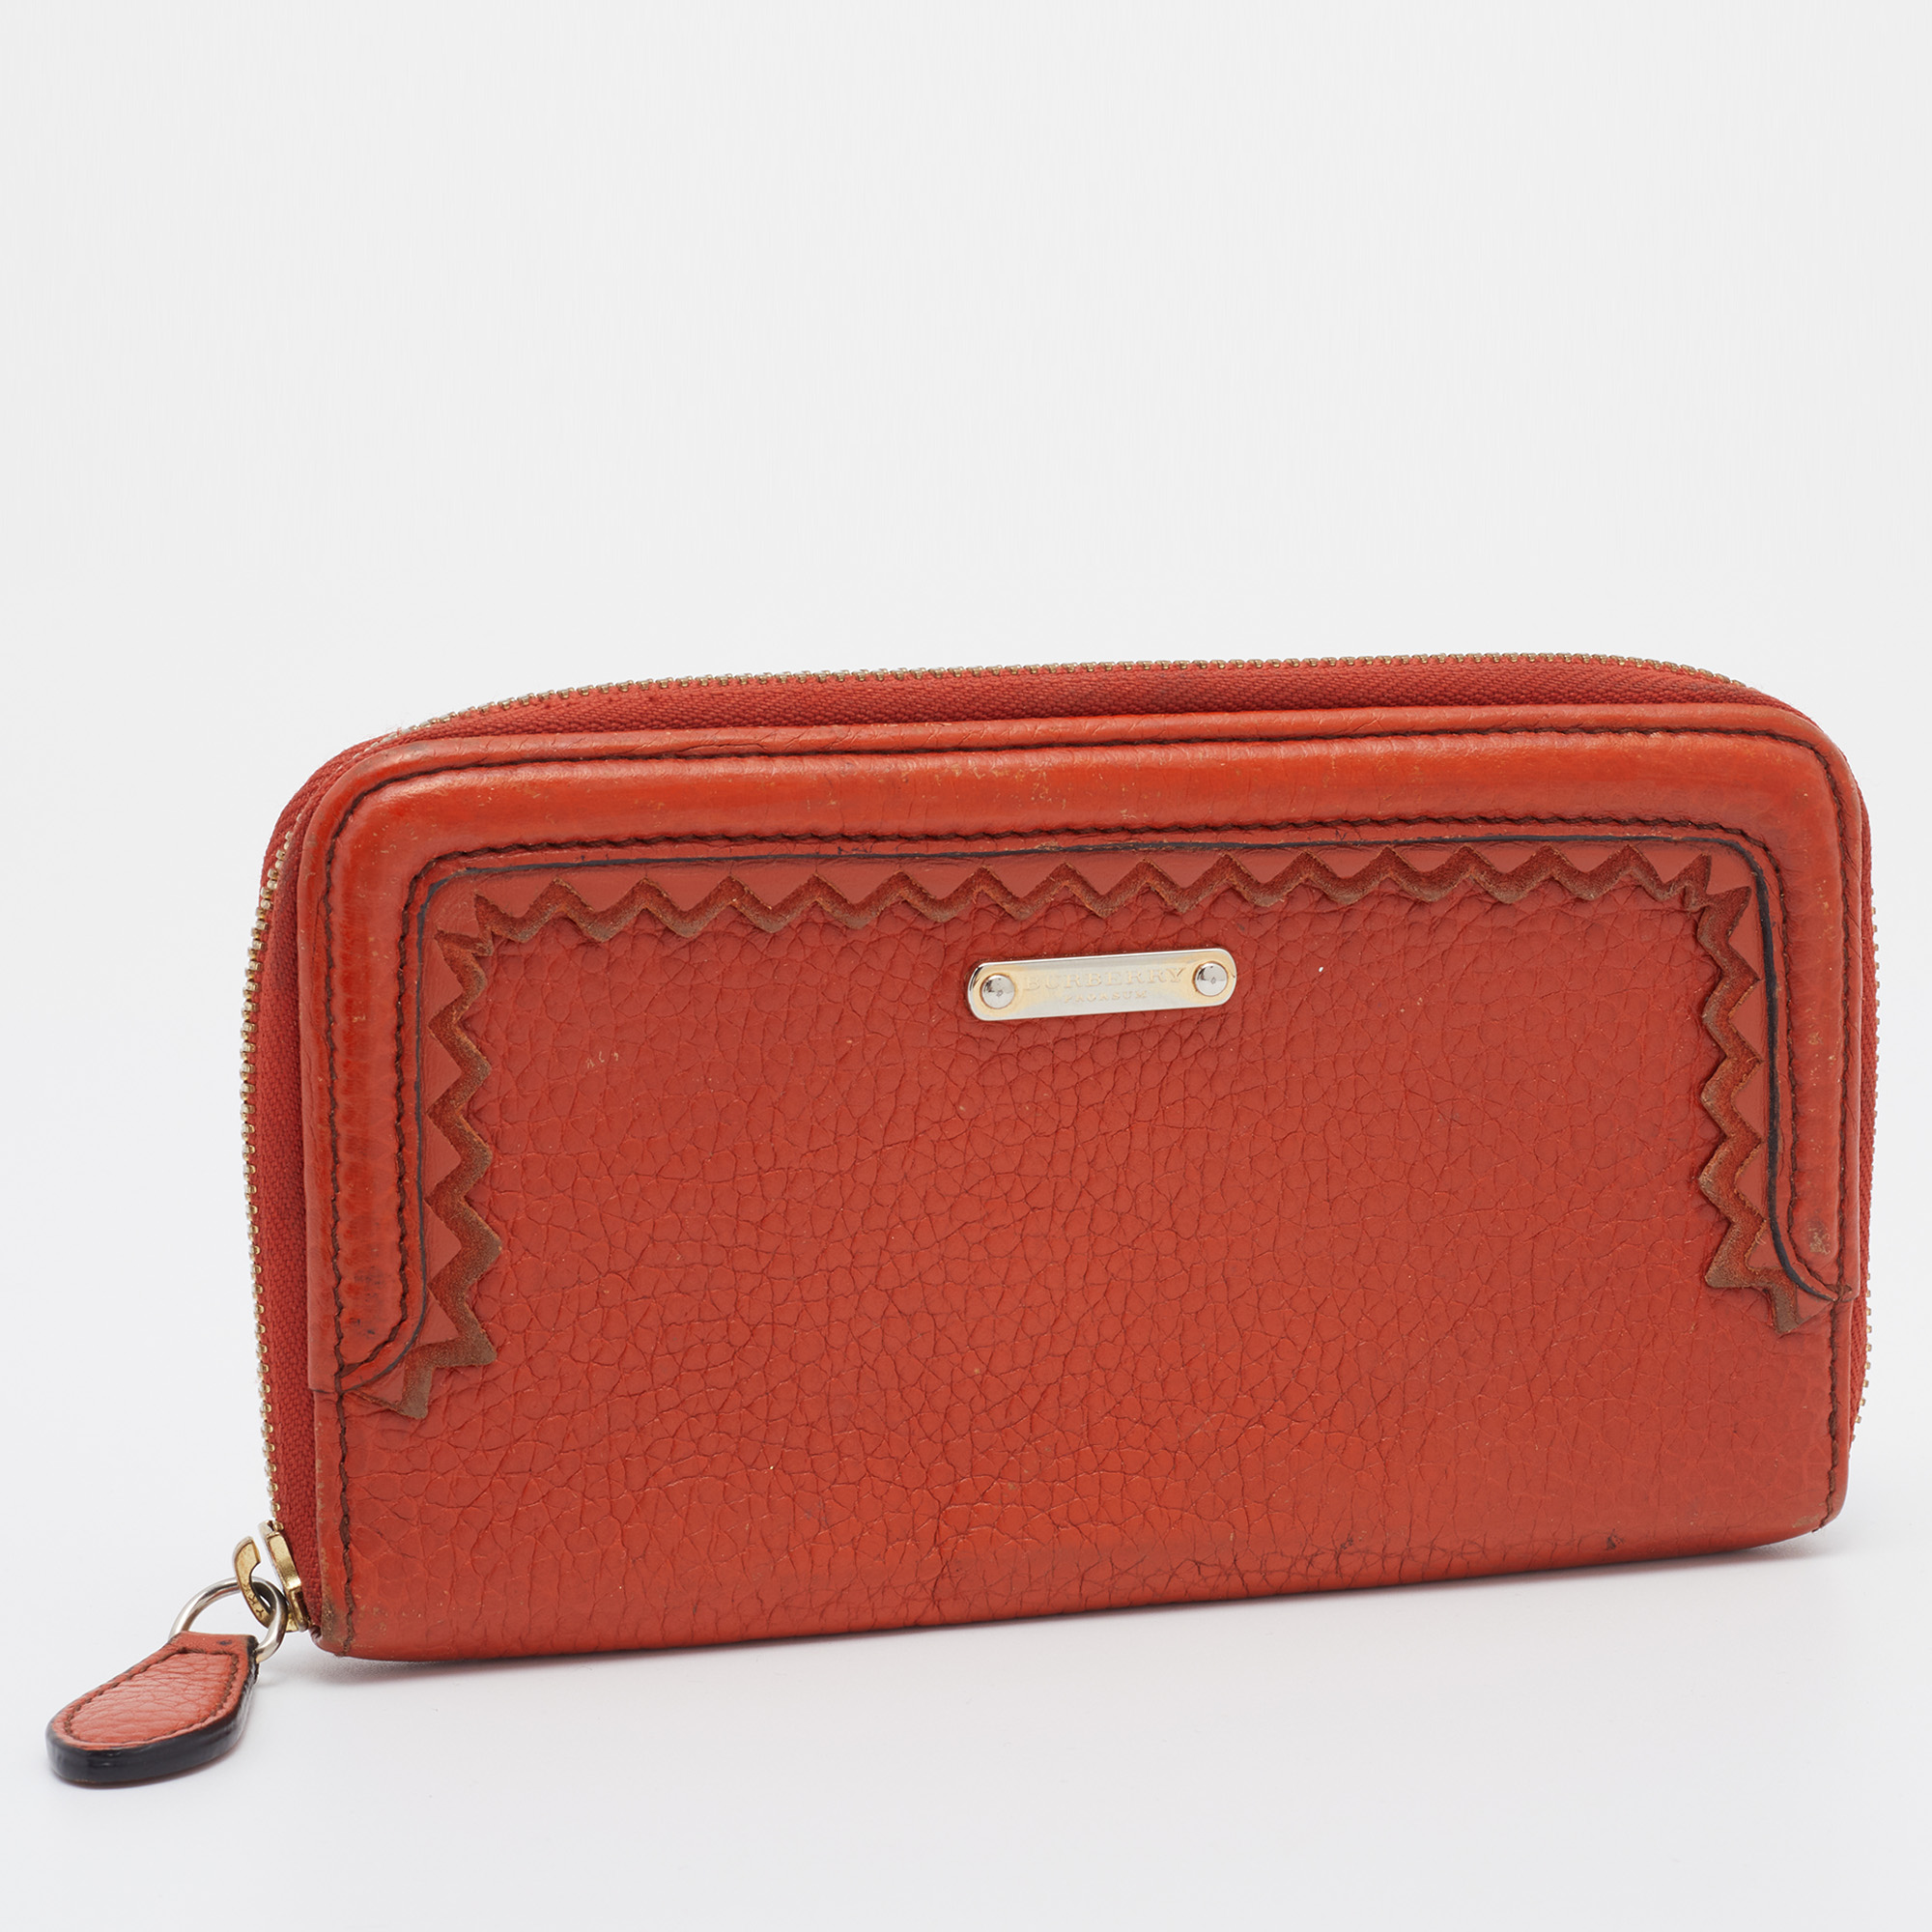 Burberry Prorsum Orange Leather Zip Around Wallet